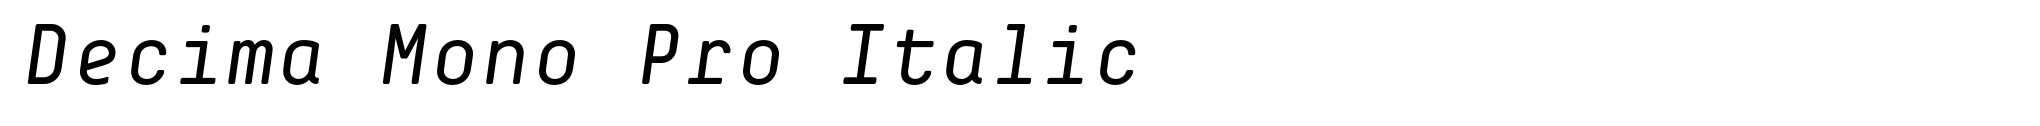 Decima Mono Pro Italic image